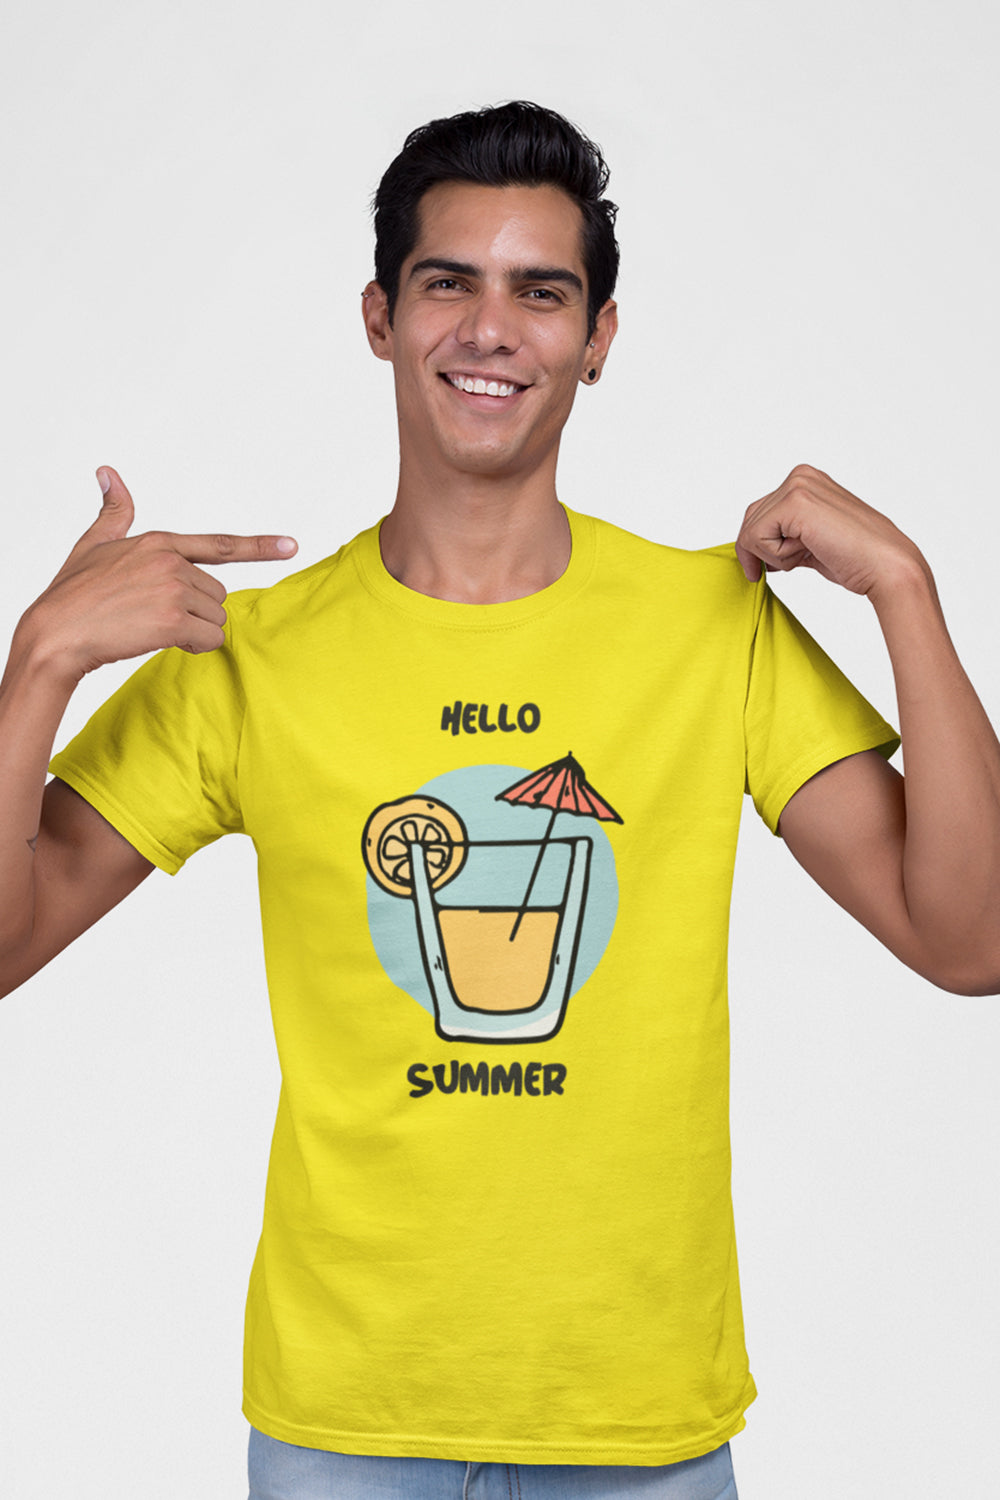 Hello Summer Graphic Printed Yellow Tshirt